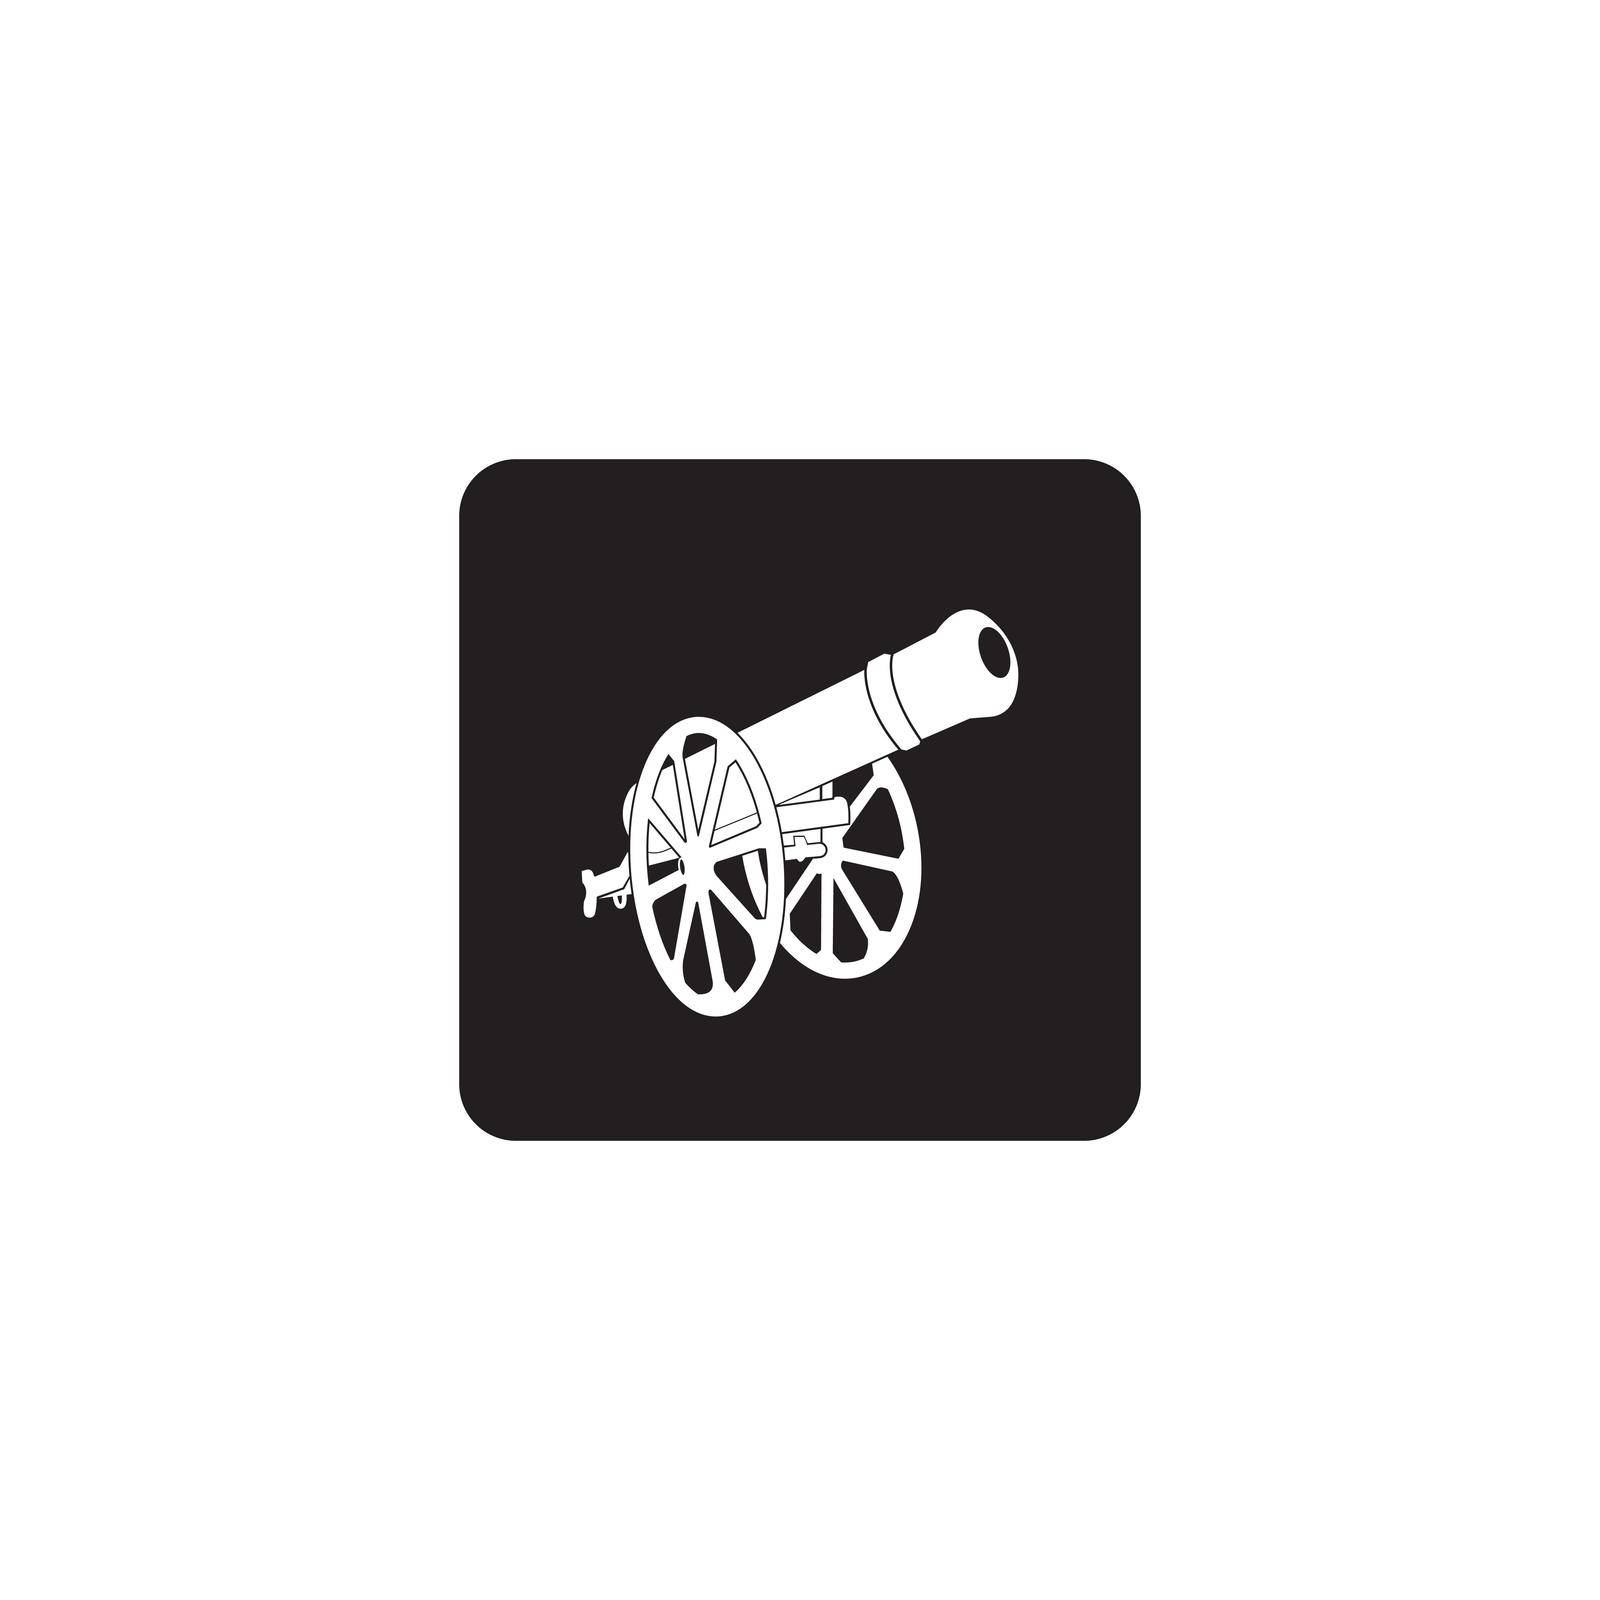 old cannon icon. vector illustration logo design